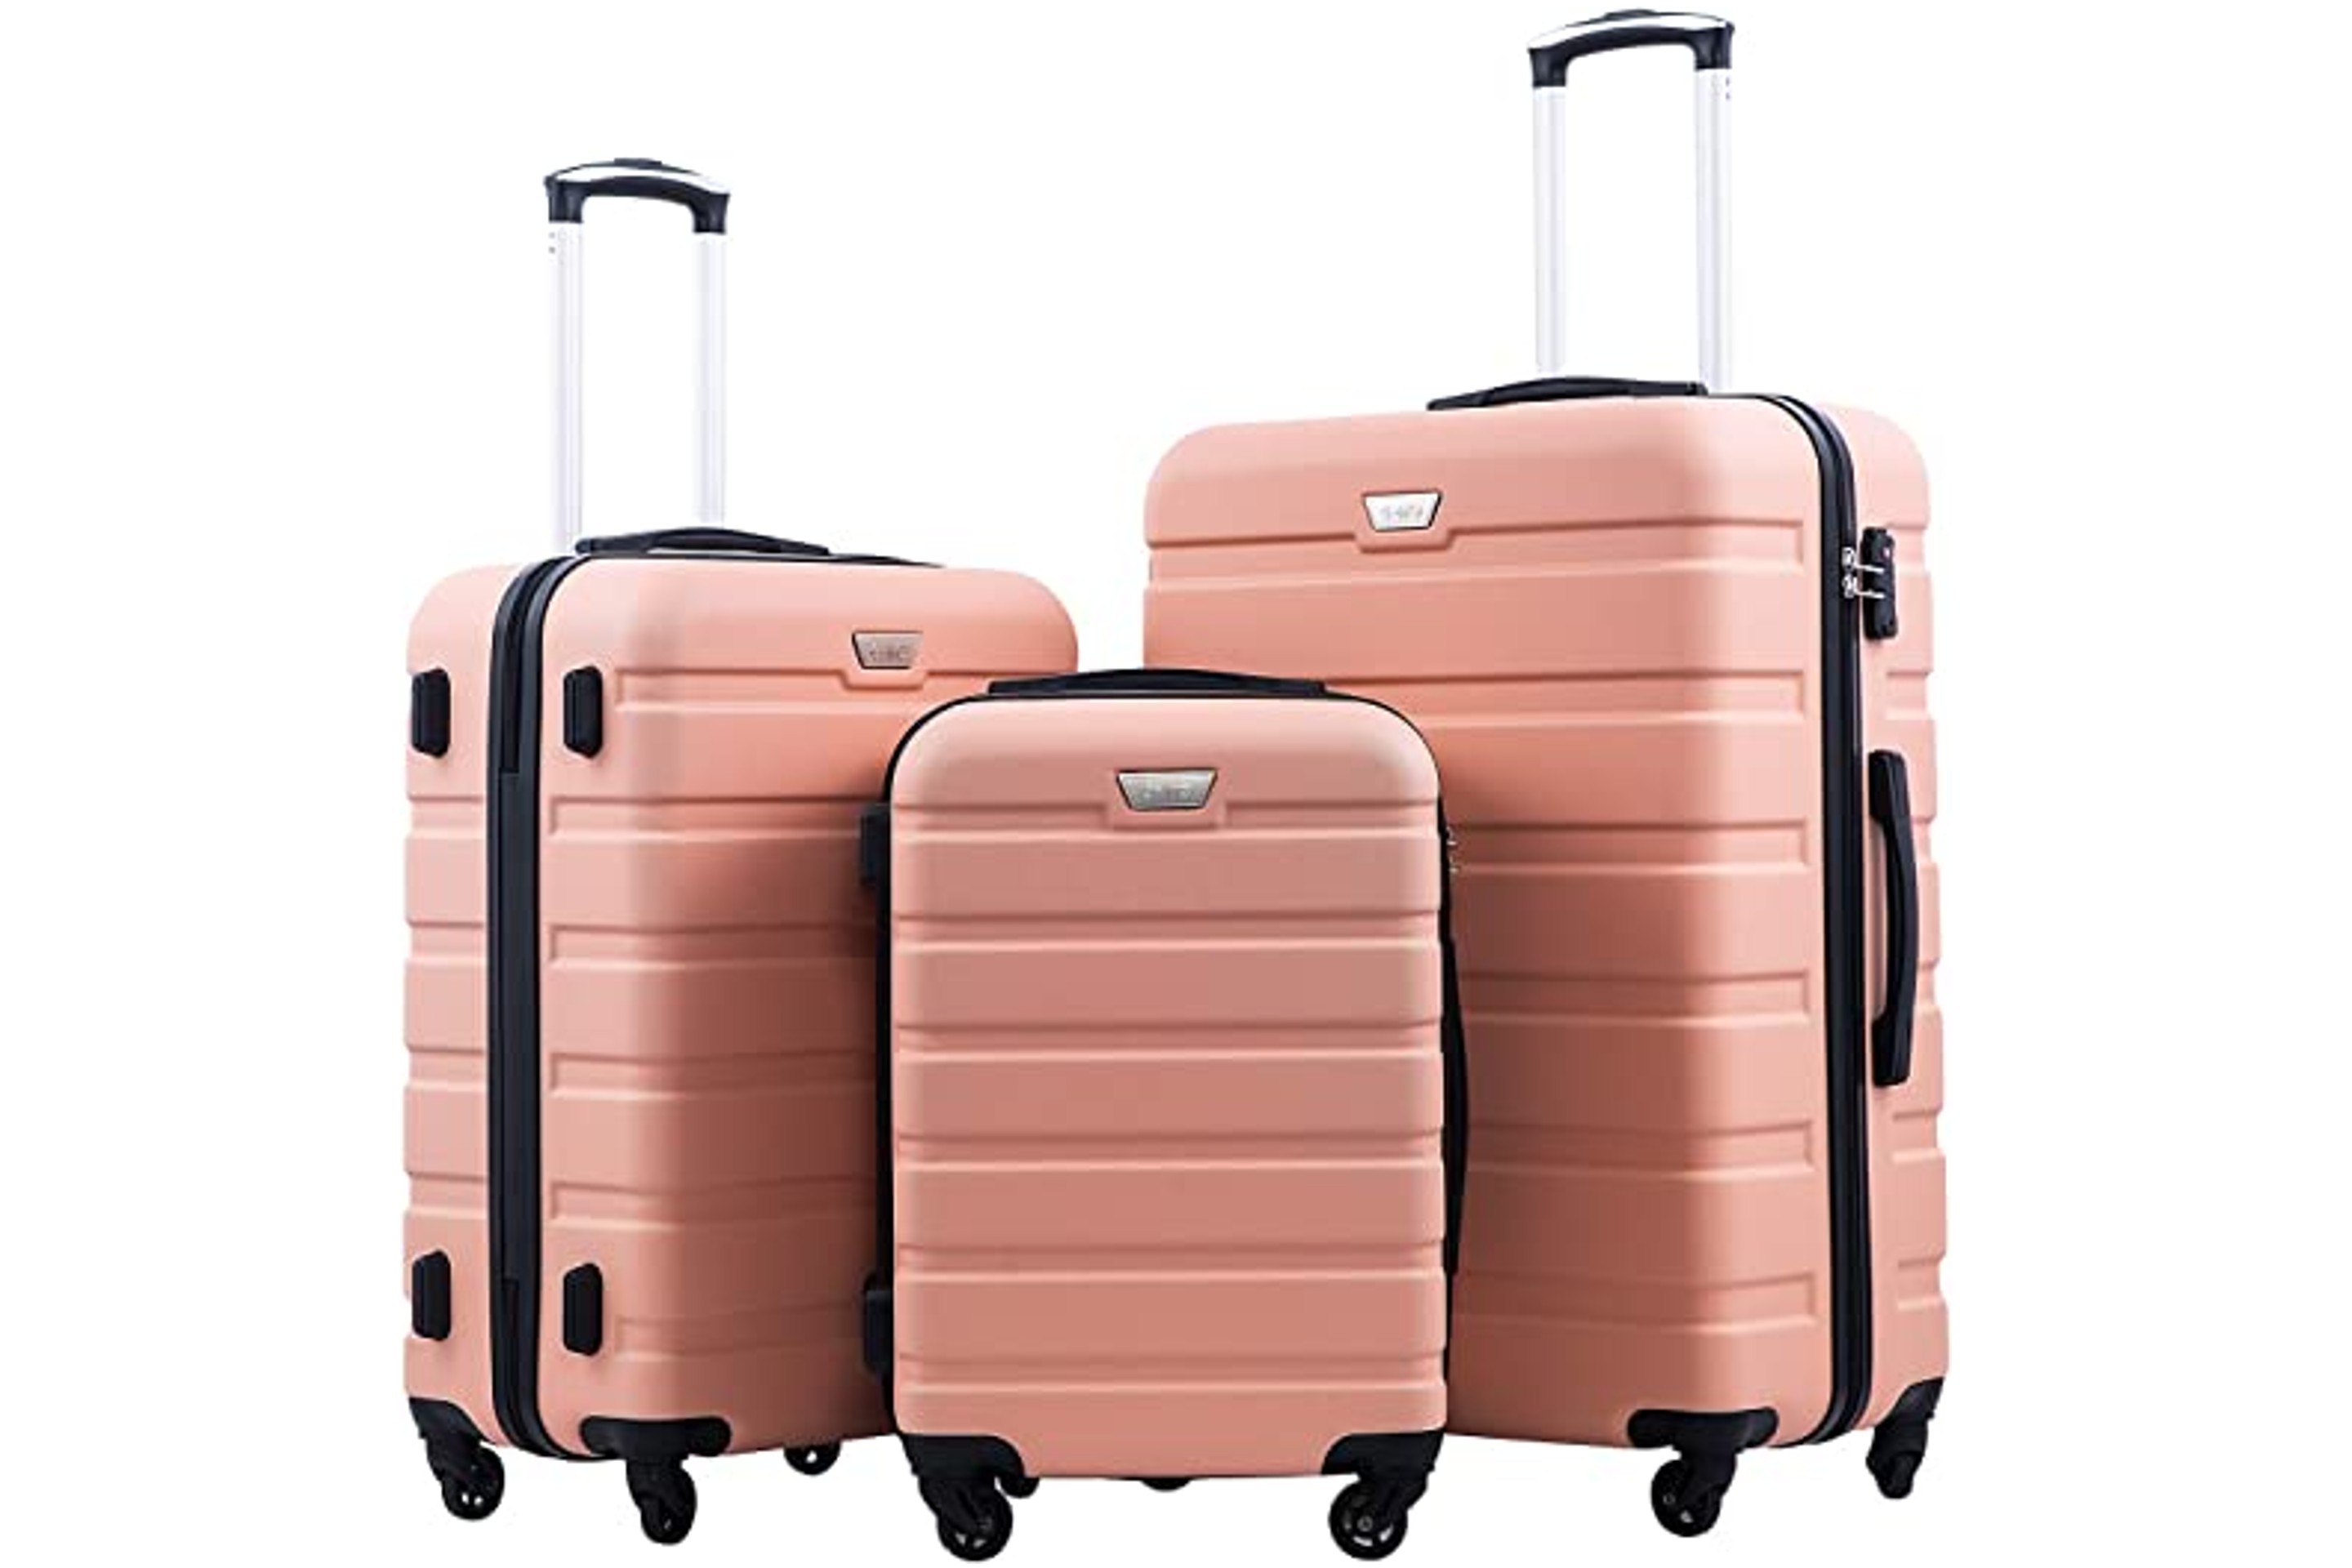 Coolife Three-Piece Luggage Set